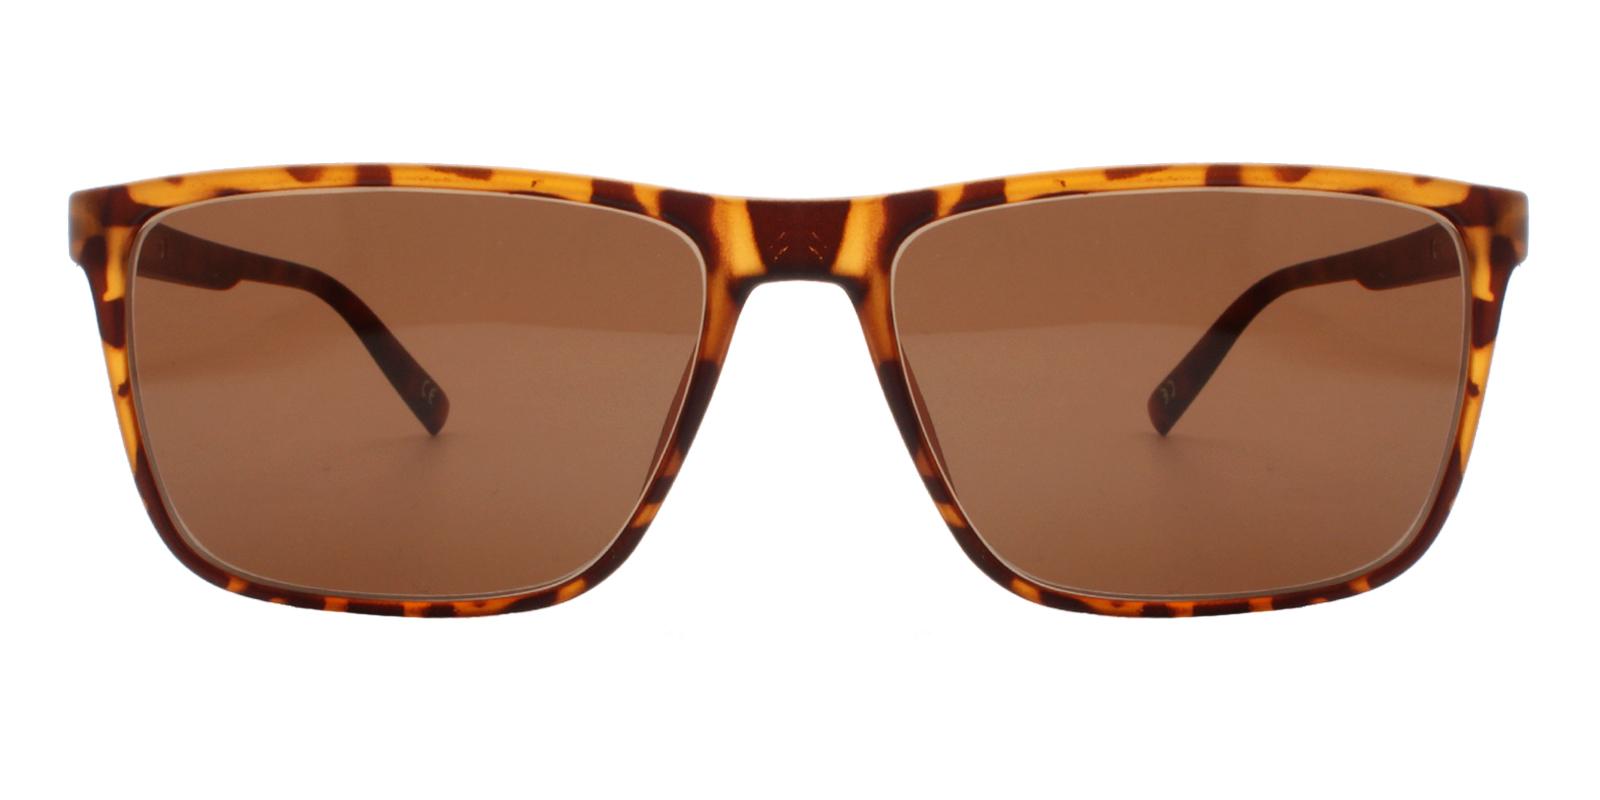 Reunion Brown TR Sunglasses , UniversalBridgeFit Frames from ABBE Glasses